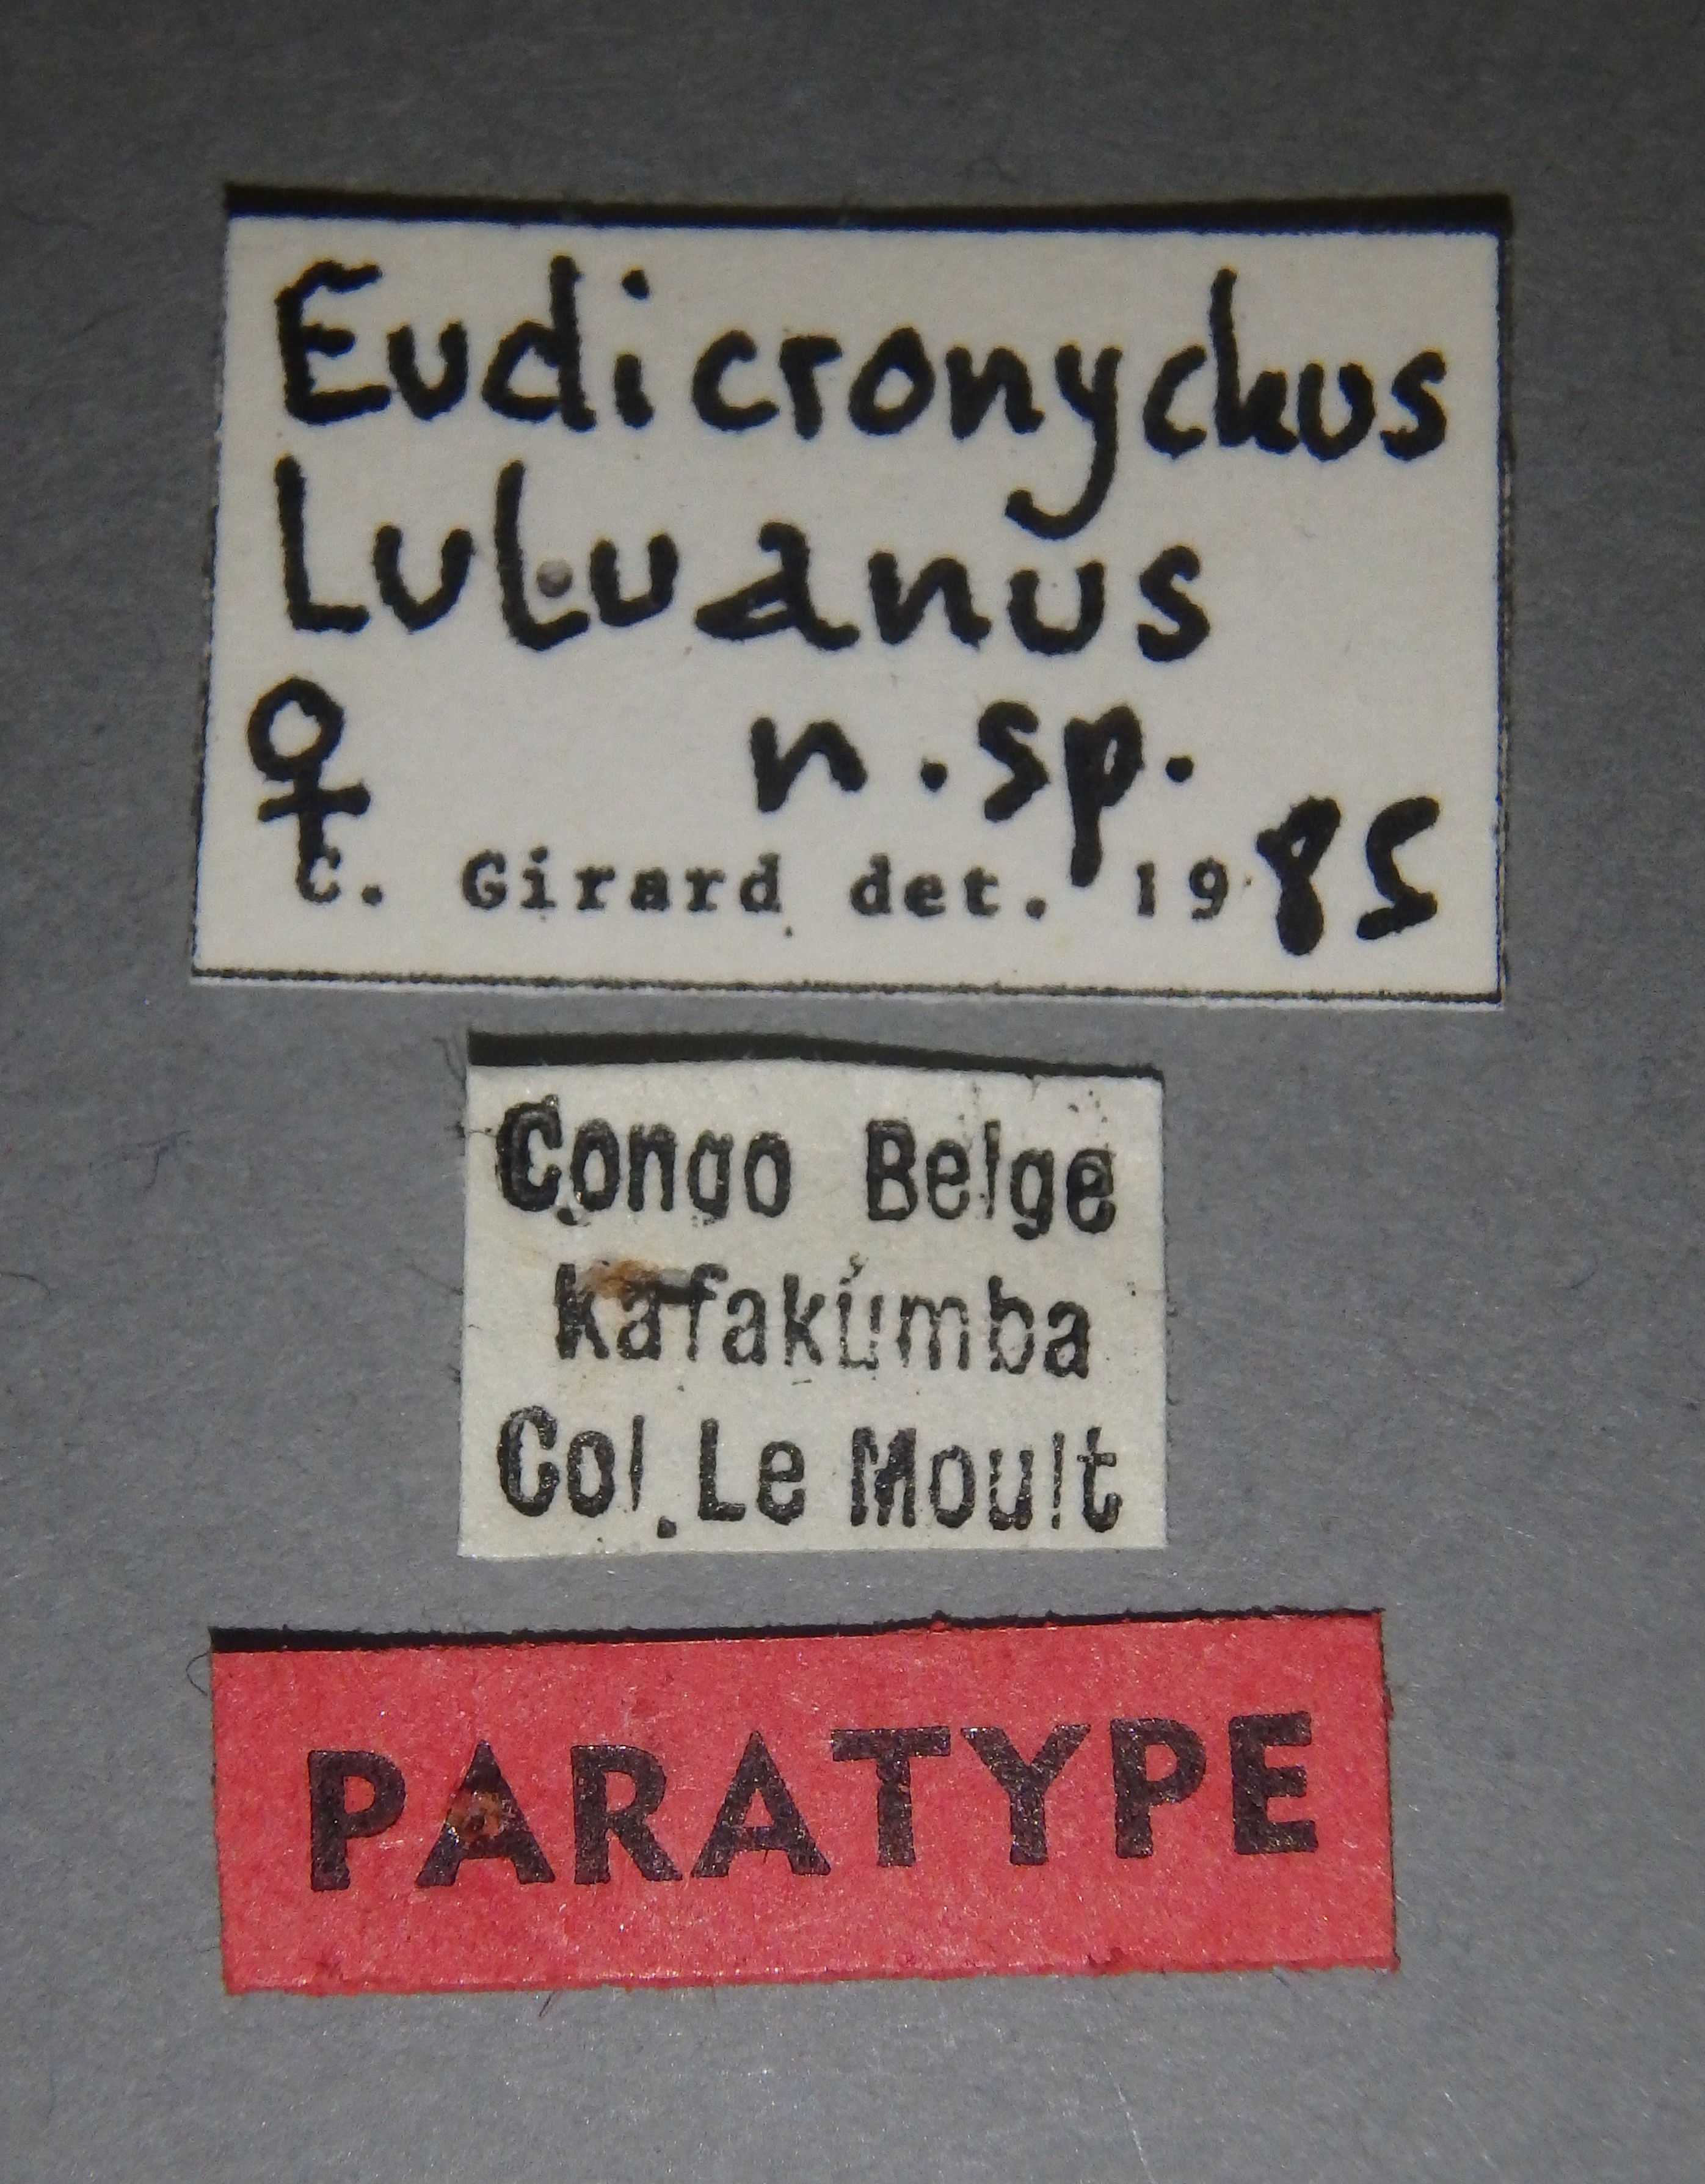 Eudicronychus luluanus pt F Lb.jpg